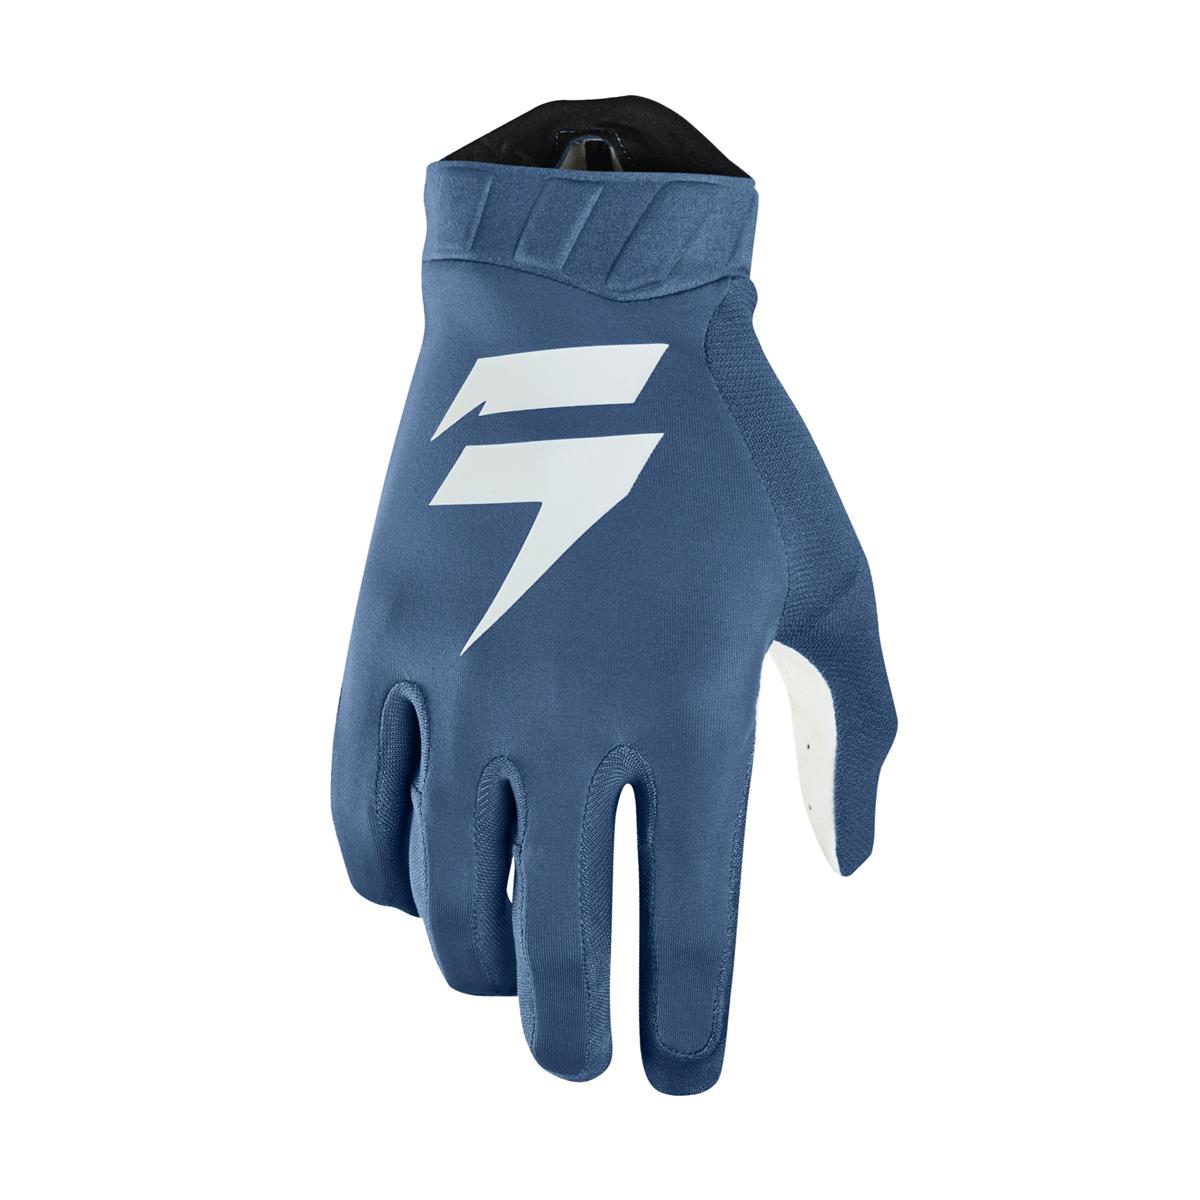 Shift Handschuhe 3lack Label Air Blau/Weiß